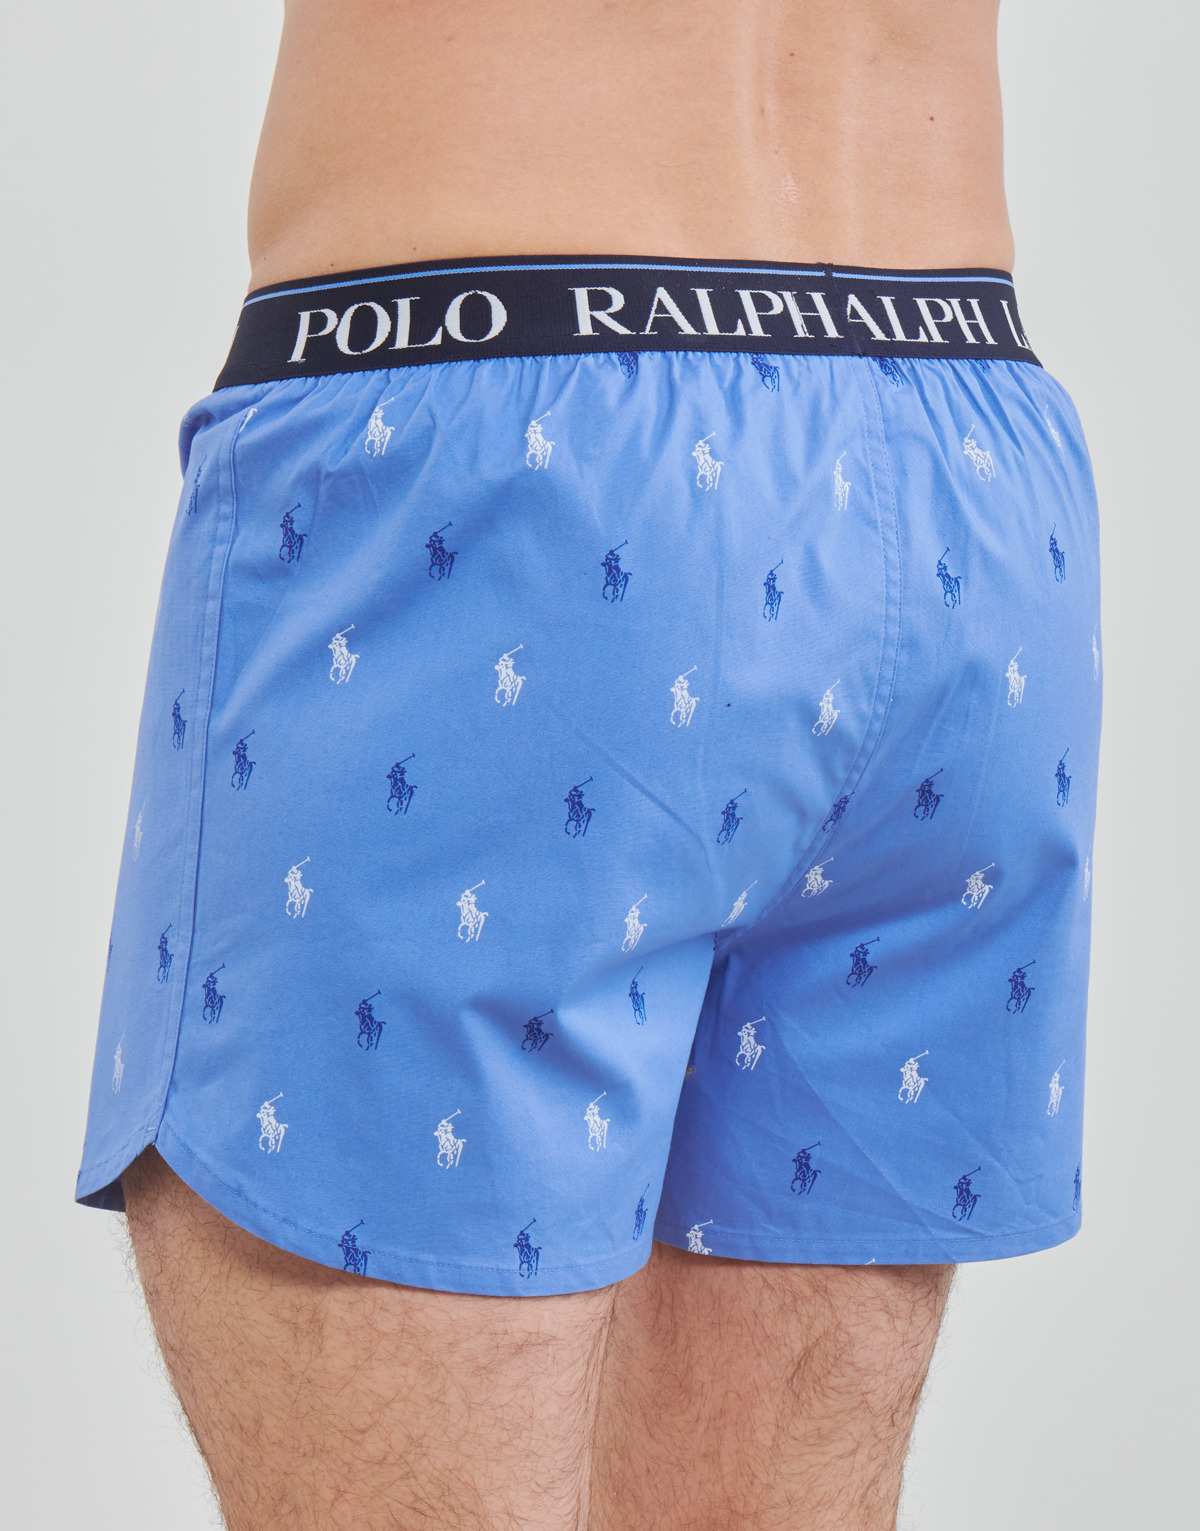 Polo Ralph Lauren Marine / Marine / Bleu WOVEN BOXER X3 AVJAg8Z7